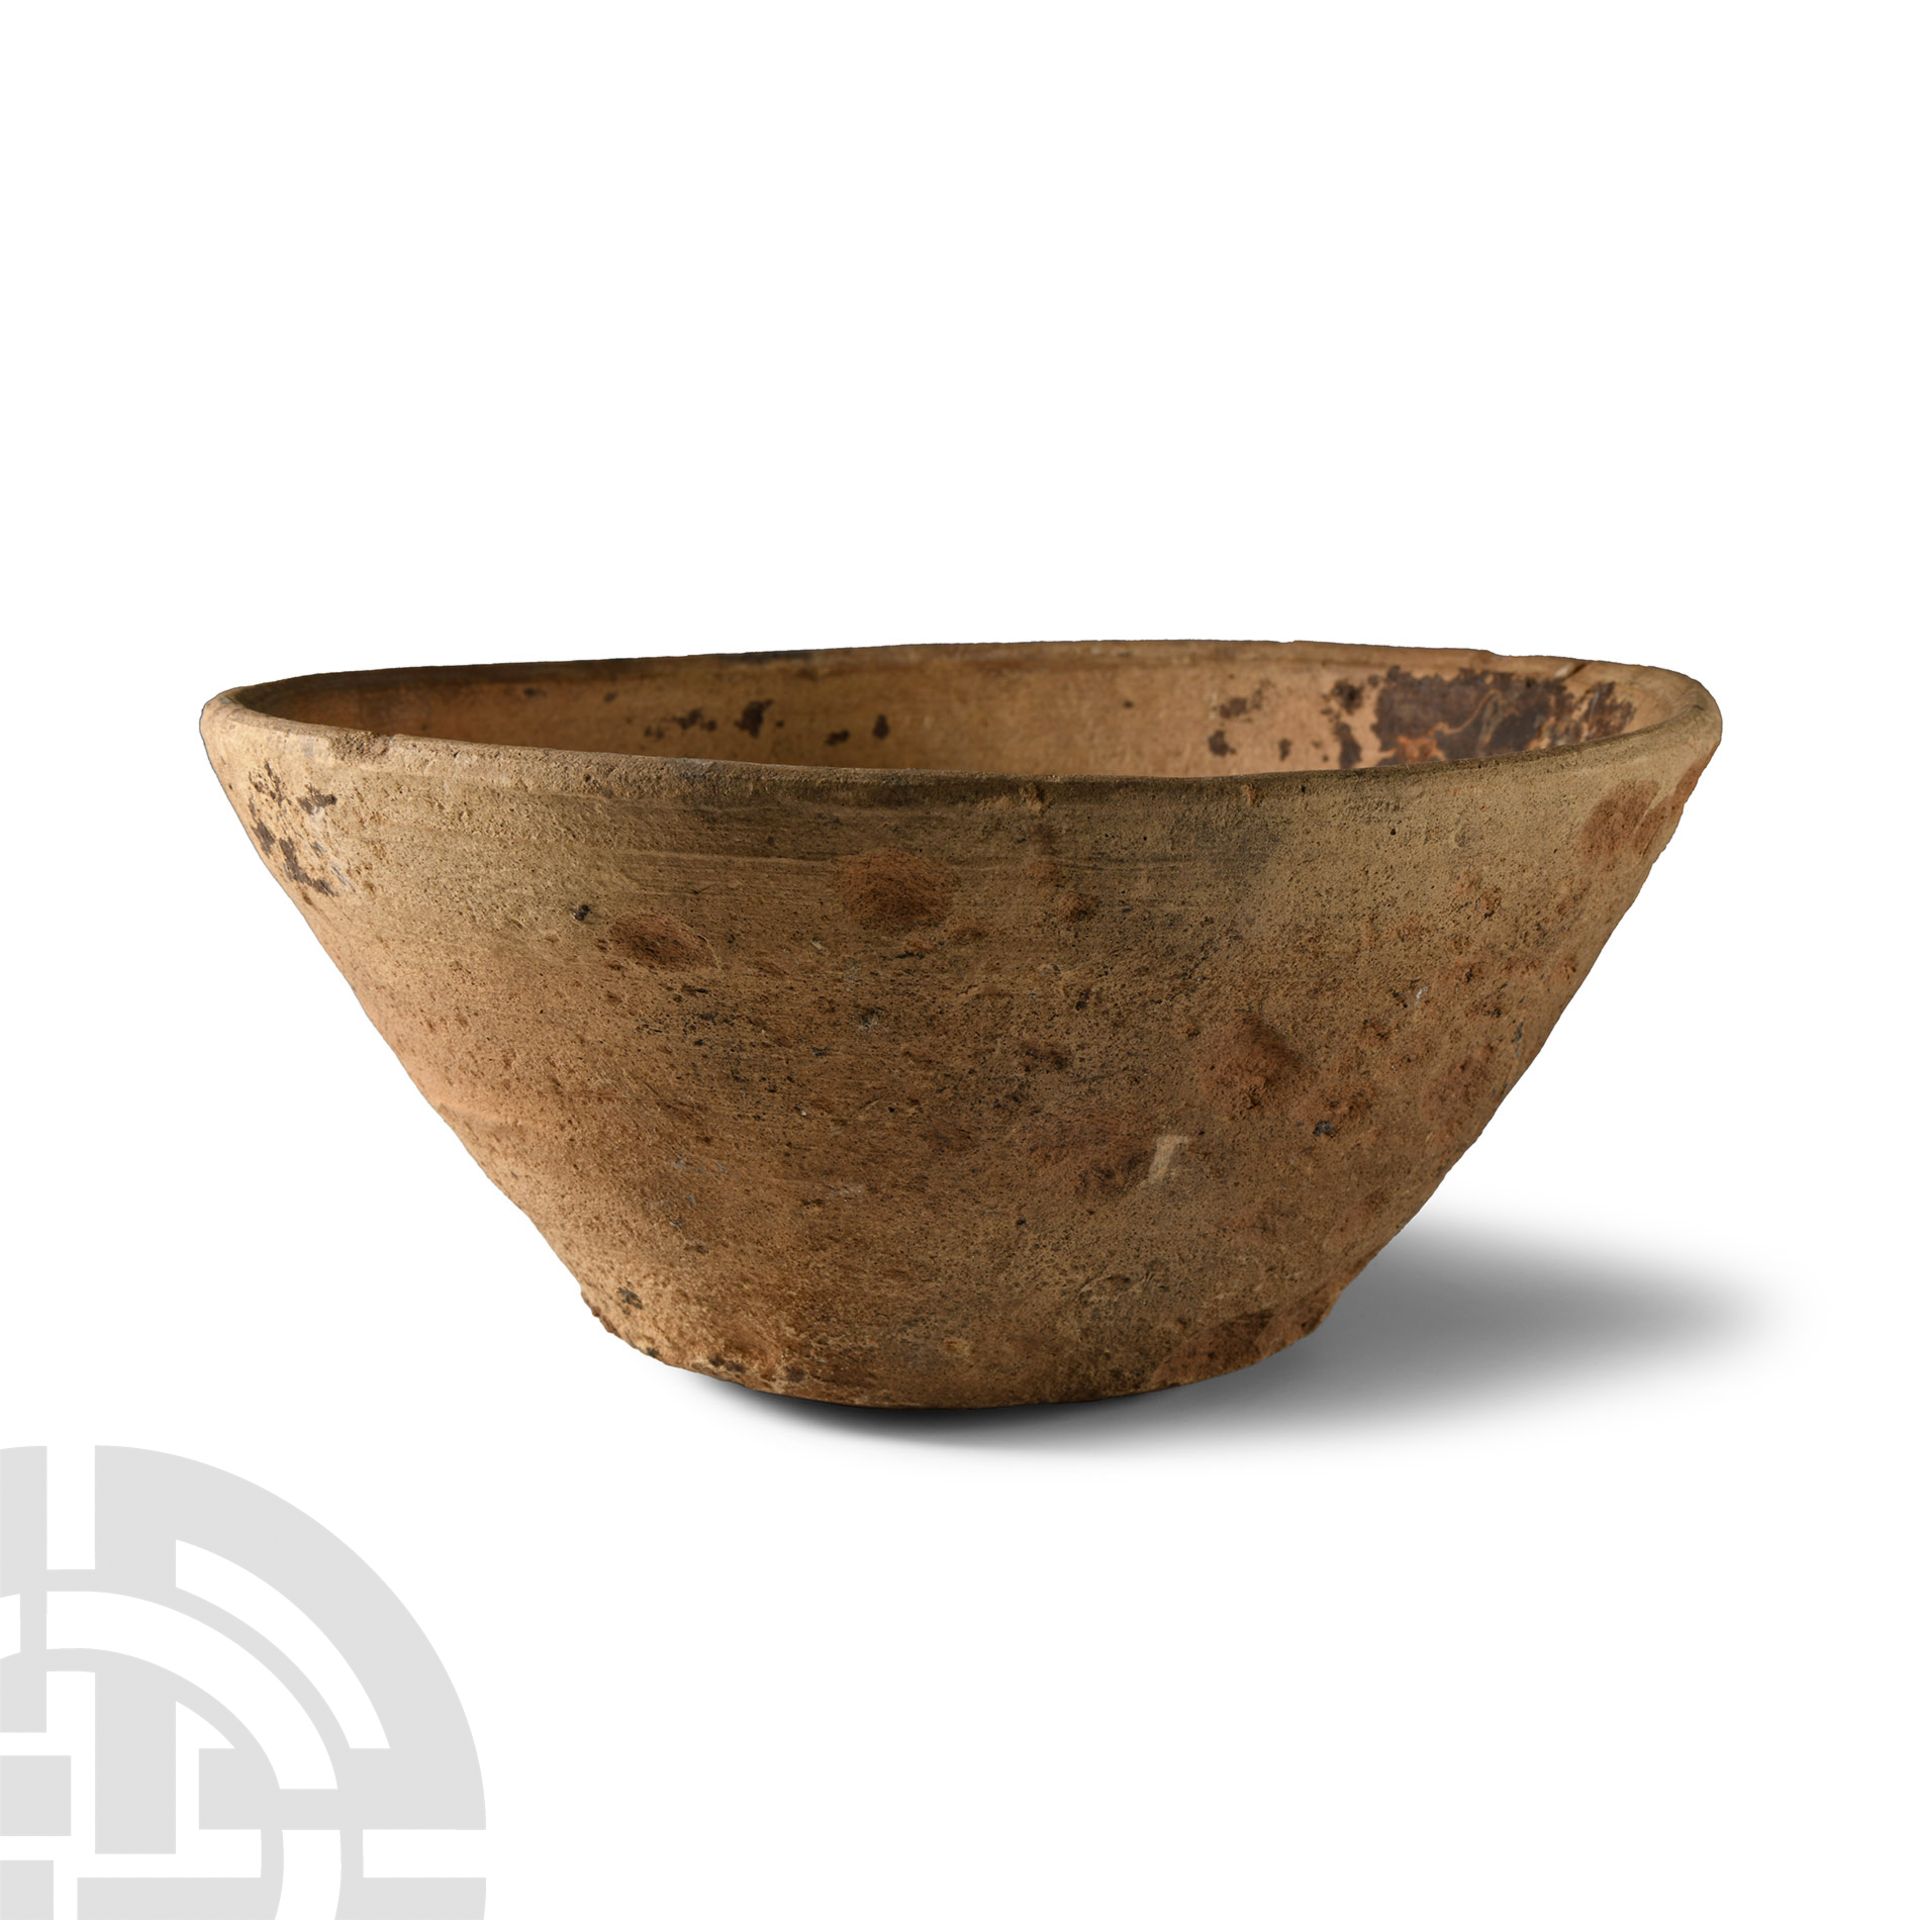 Aramaic Terracotta Bowl with Magical Incantation